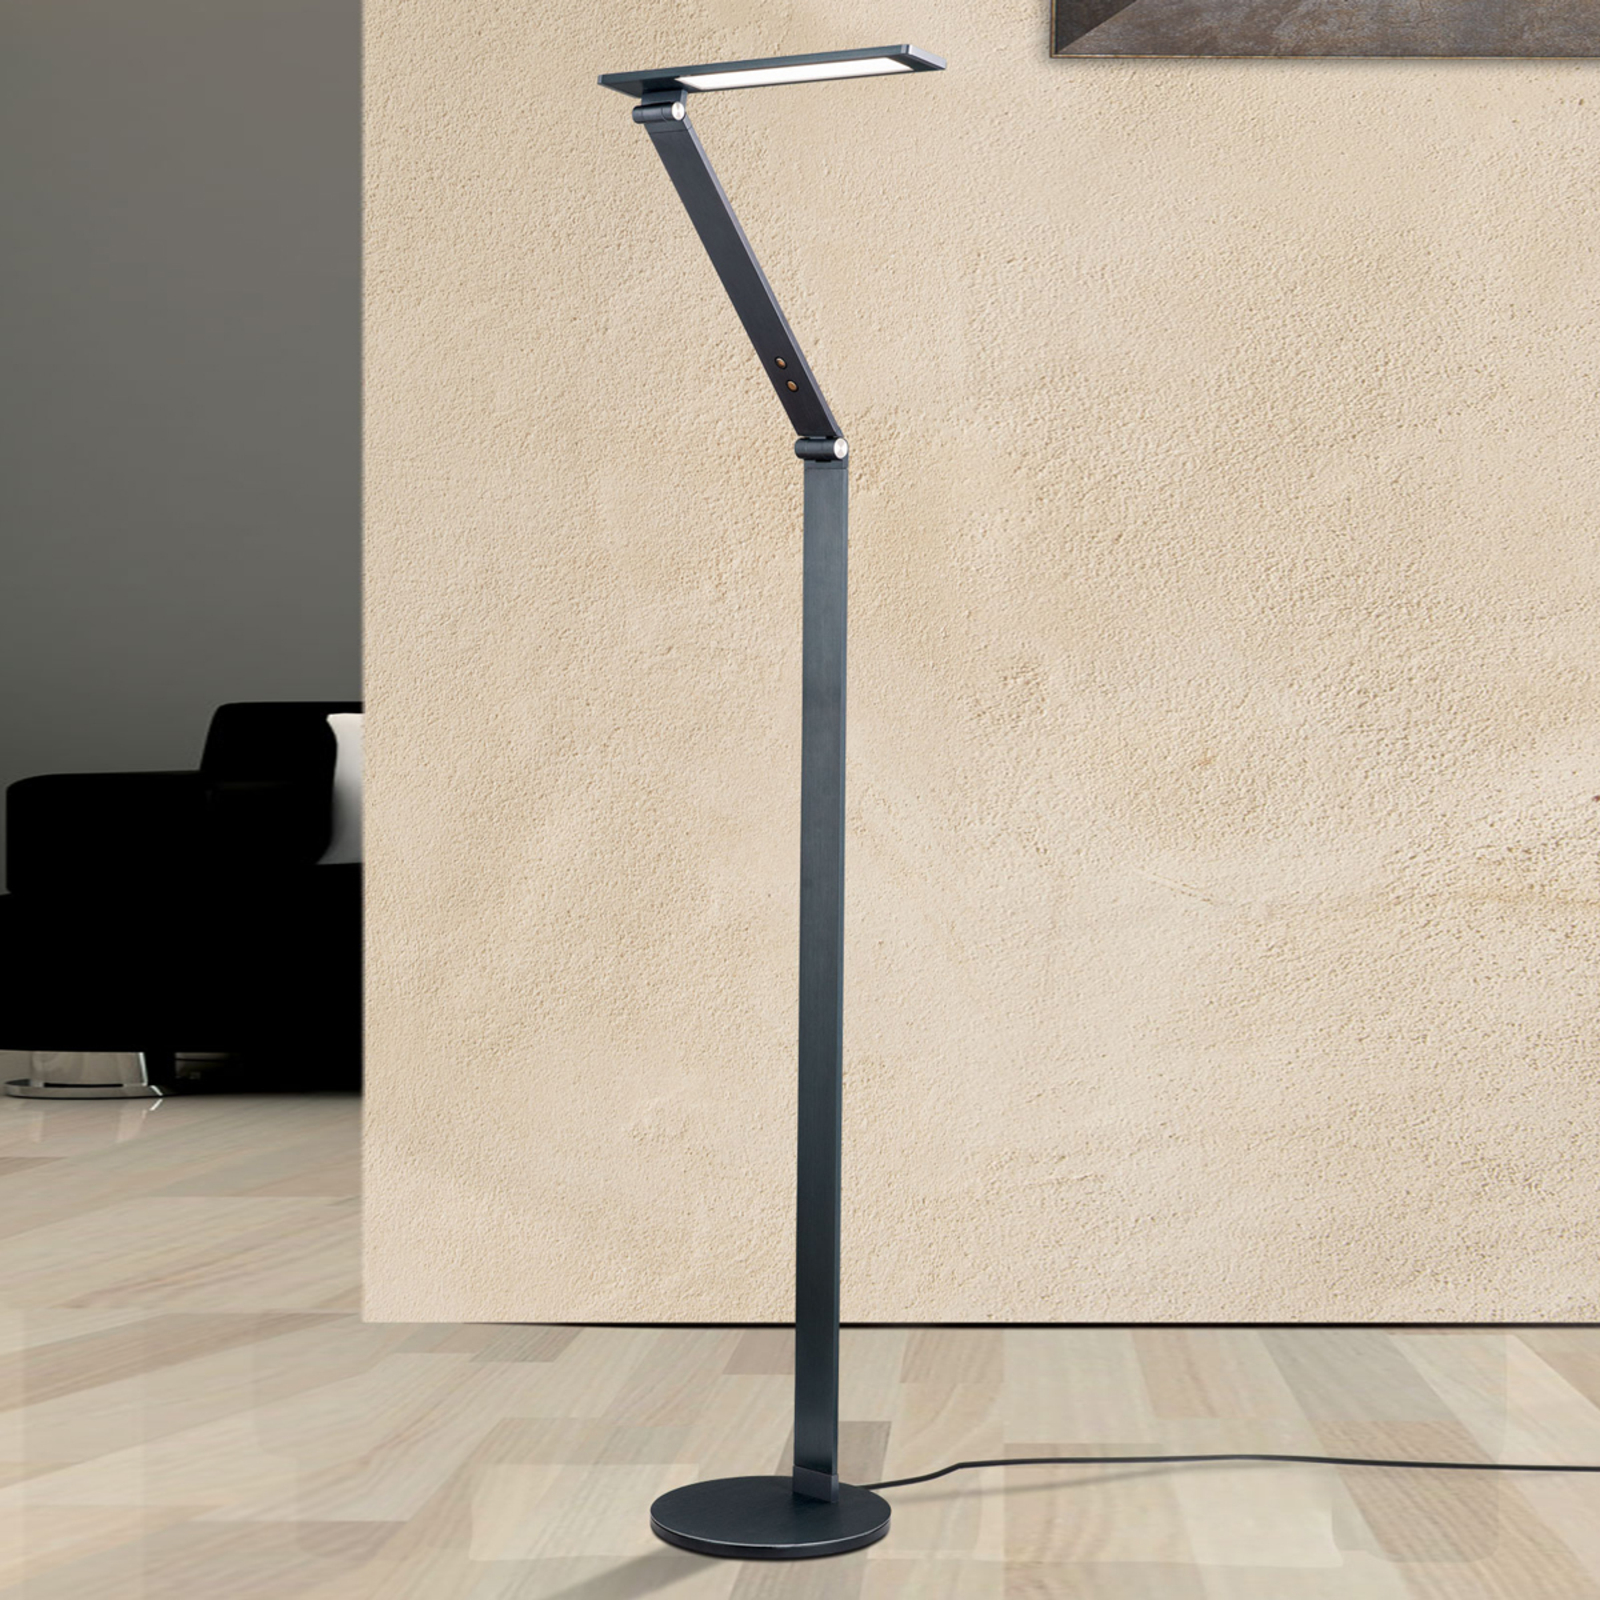 High-quality Karina LED floor lamp